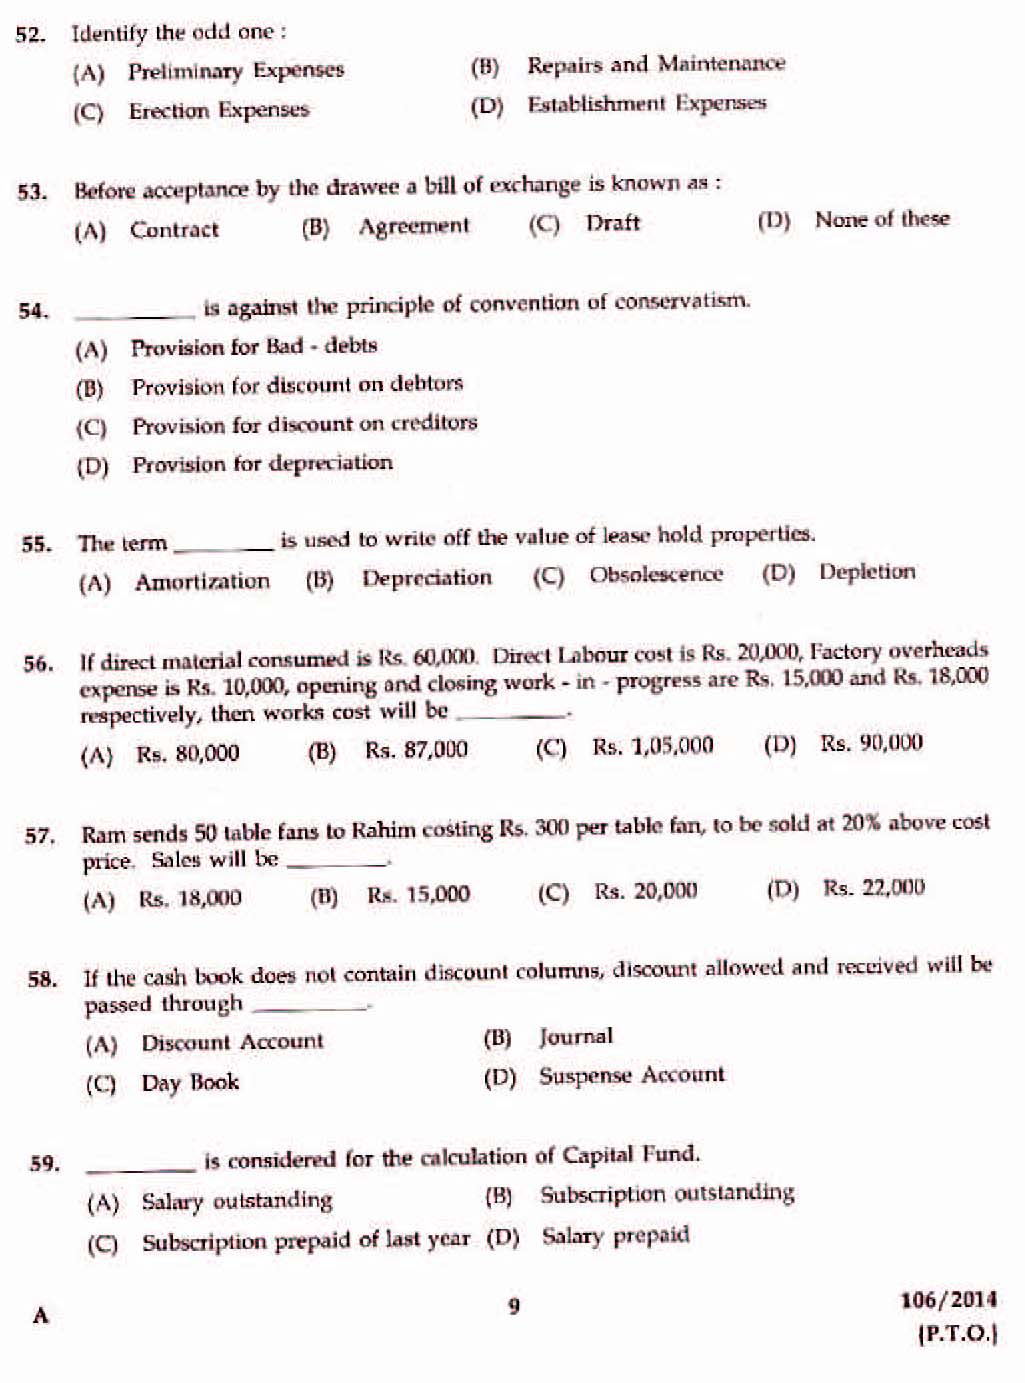 Kerala PSC Divisional Accountant OMR Exam 2014 Question Paper Code 1062014 7